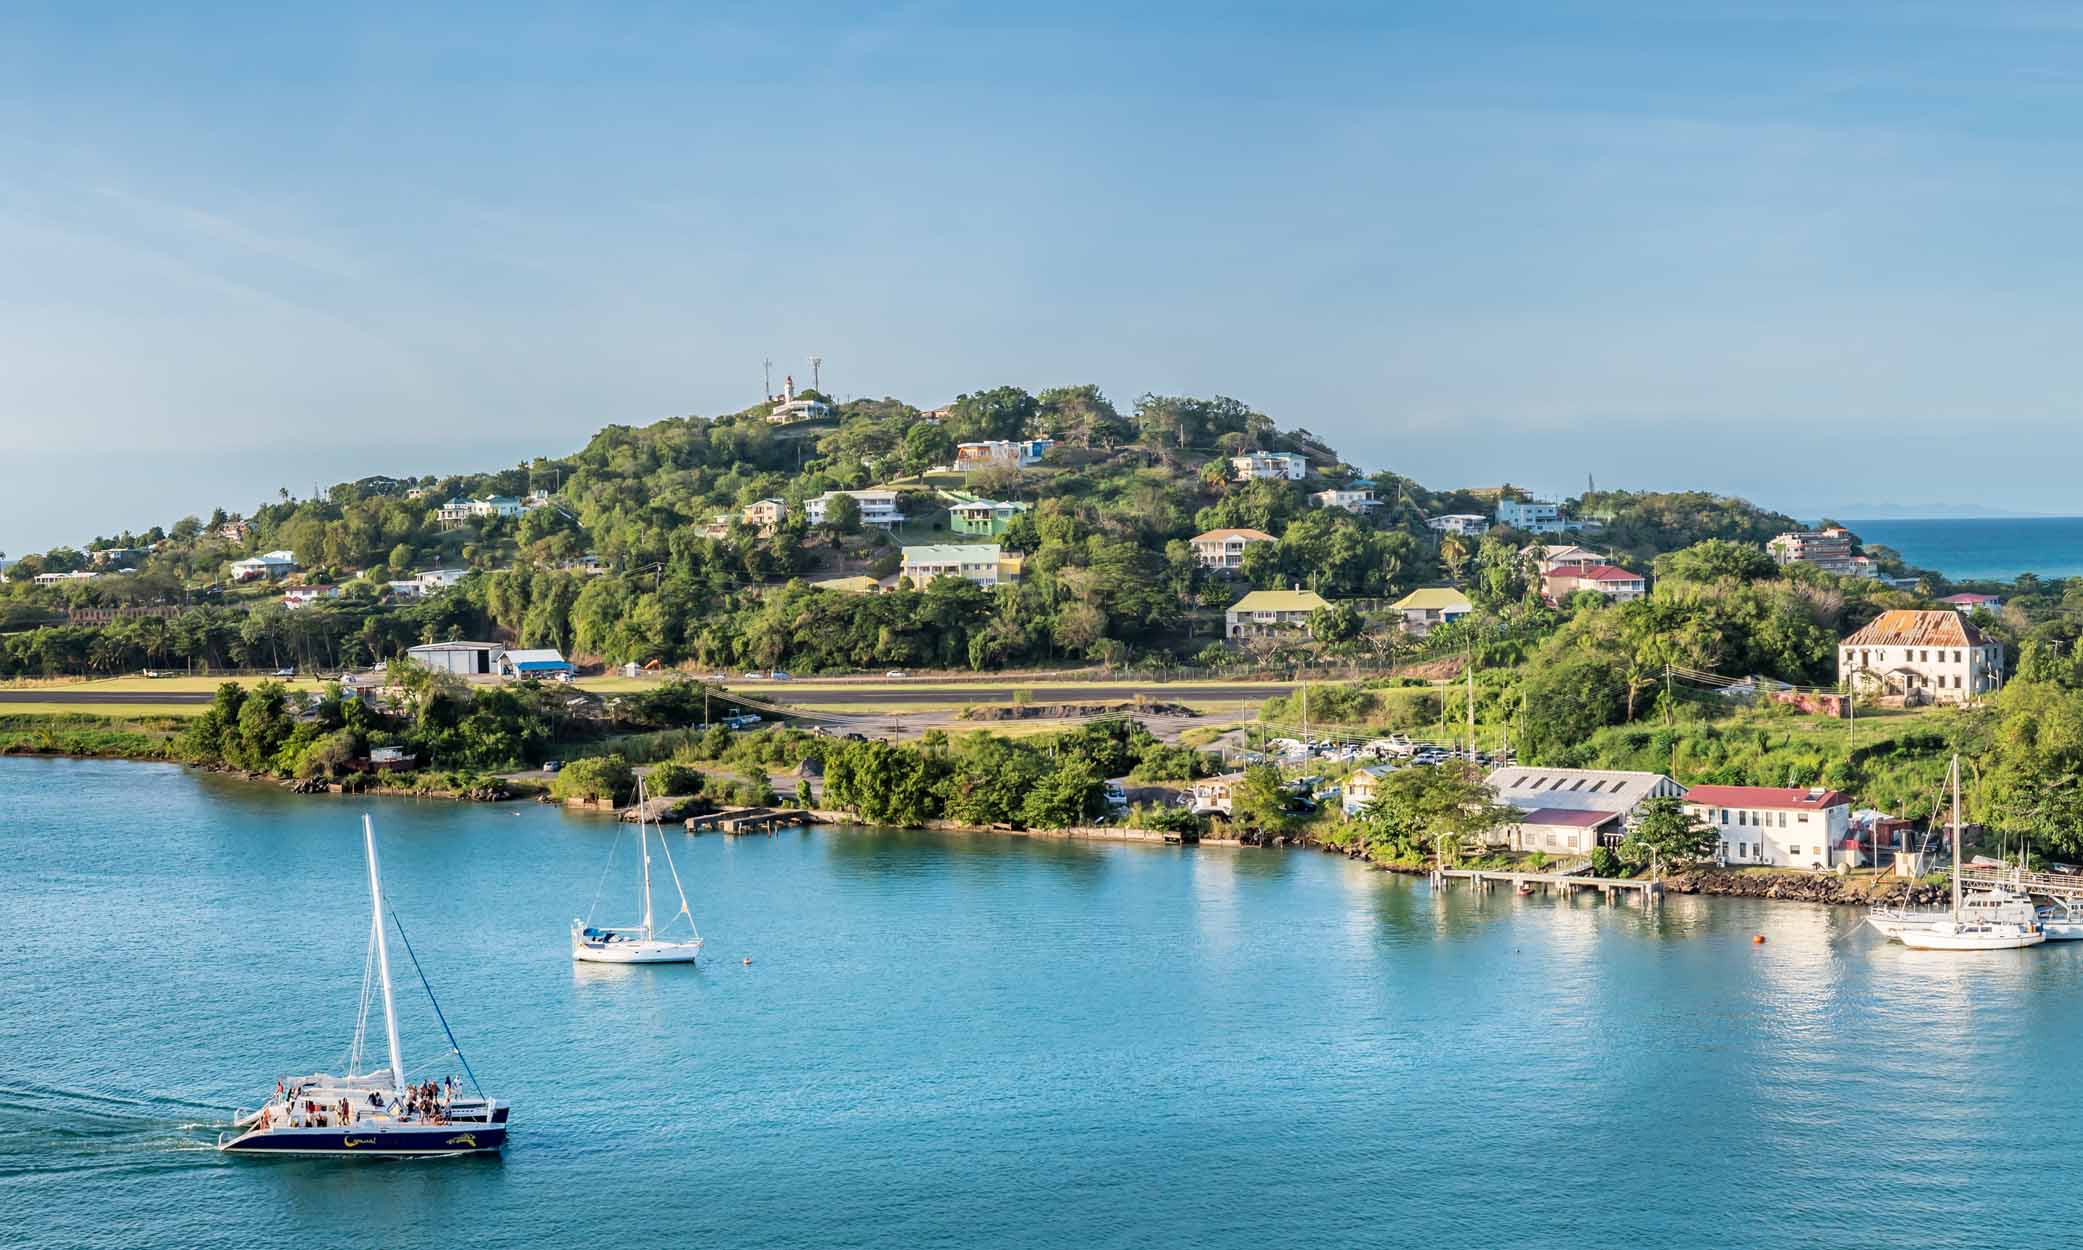 St Lucia properties offer delightful sea views.